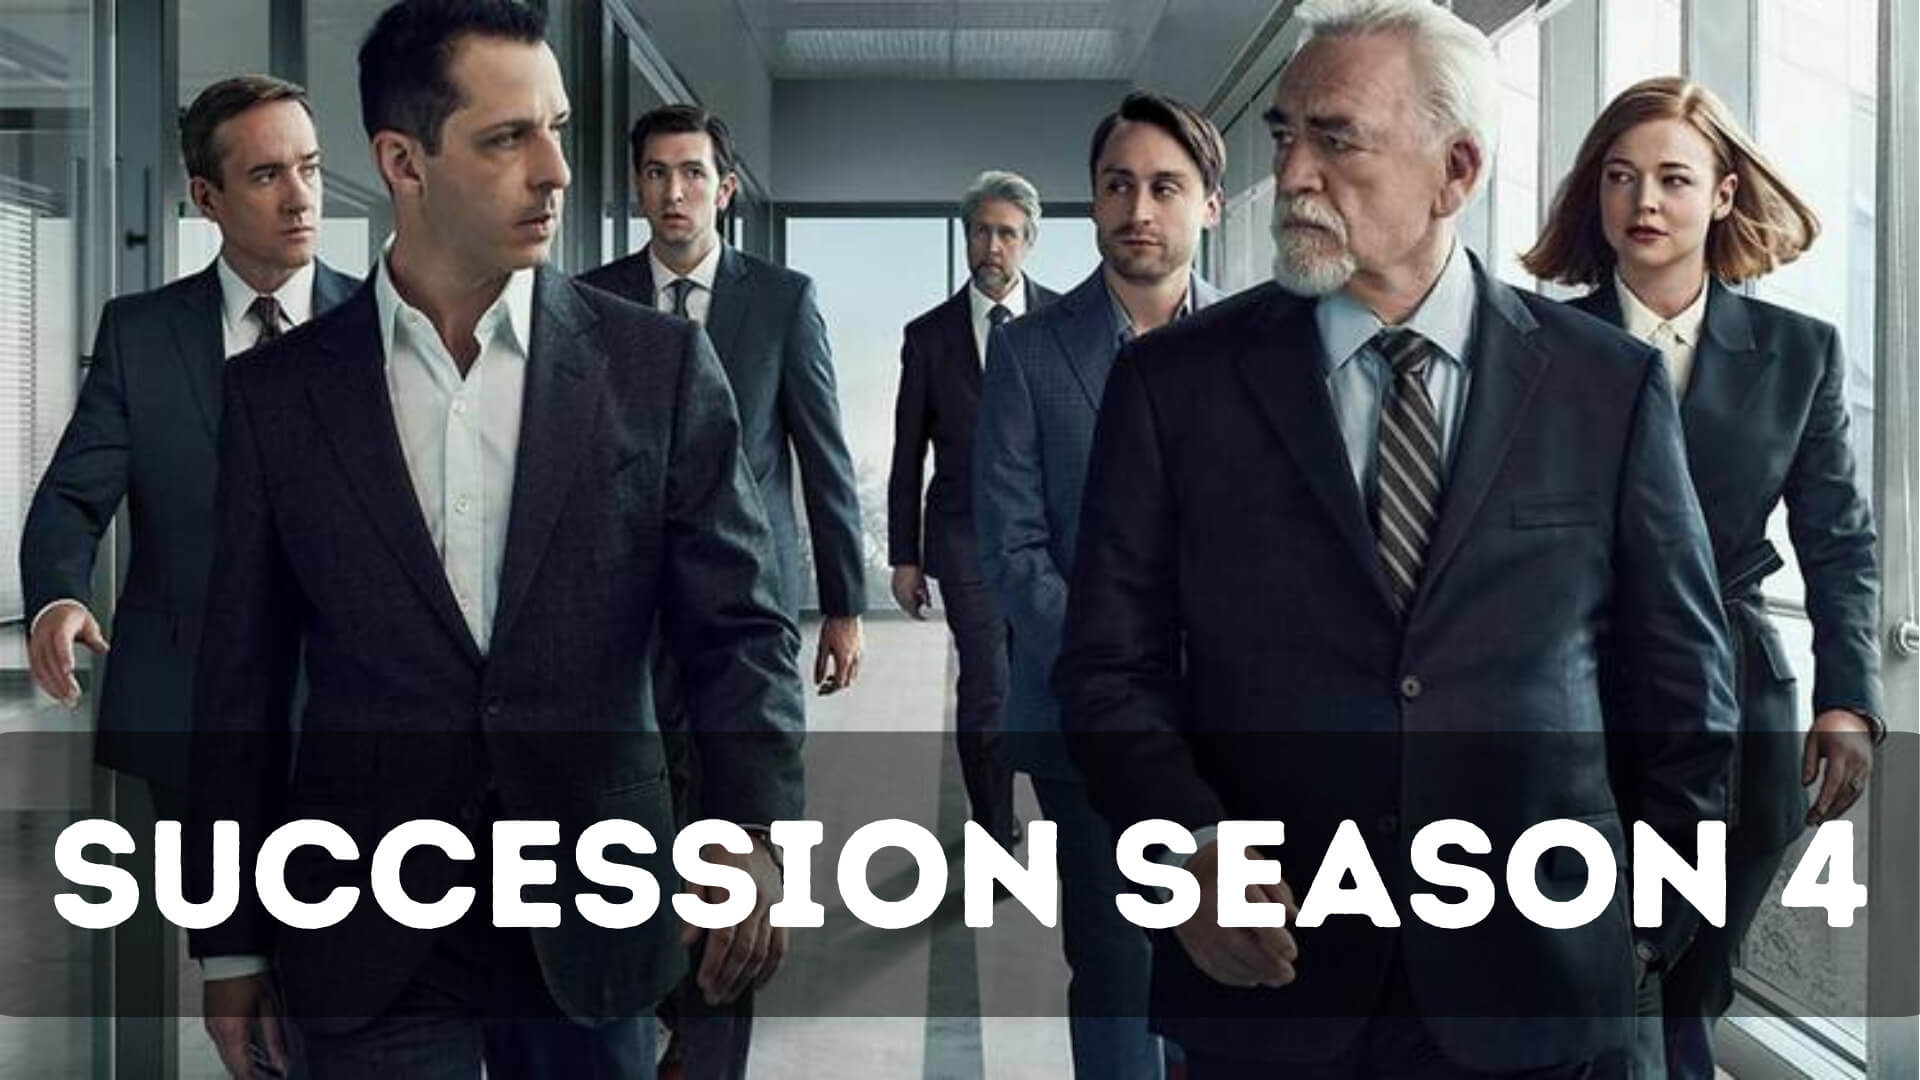 Succession season 4 News, Release Date, Cast, Spoilers & Updates